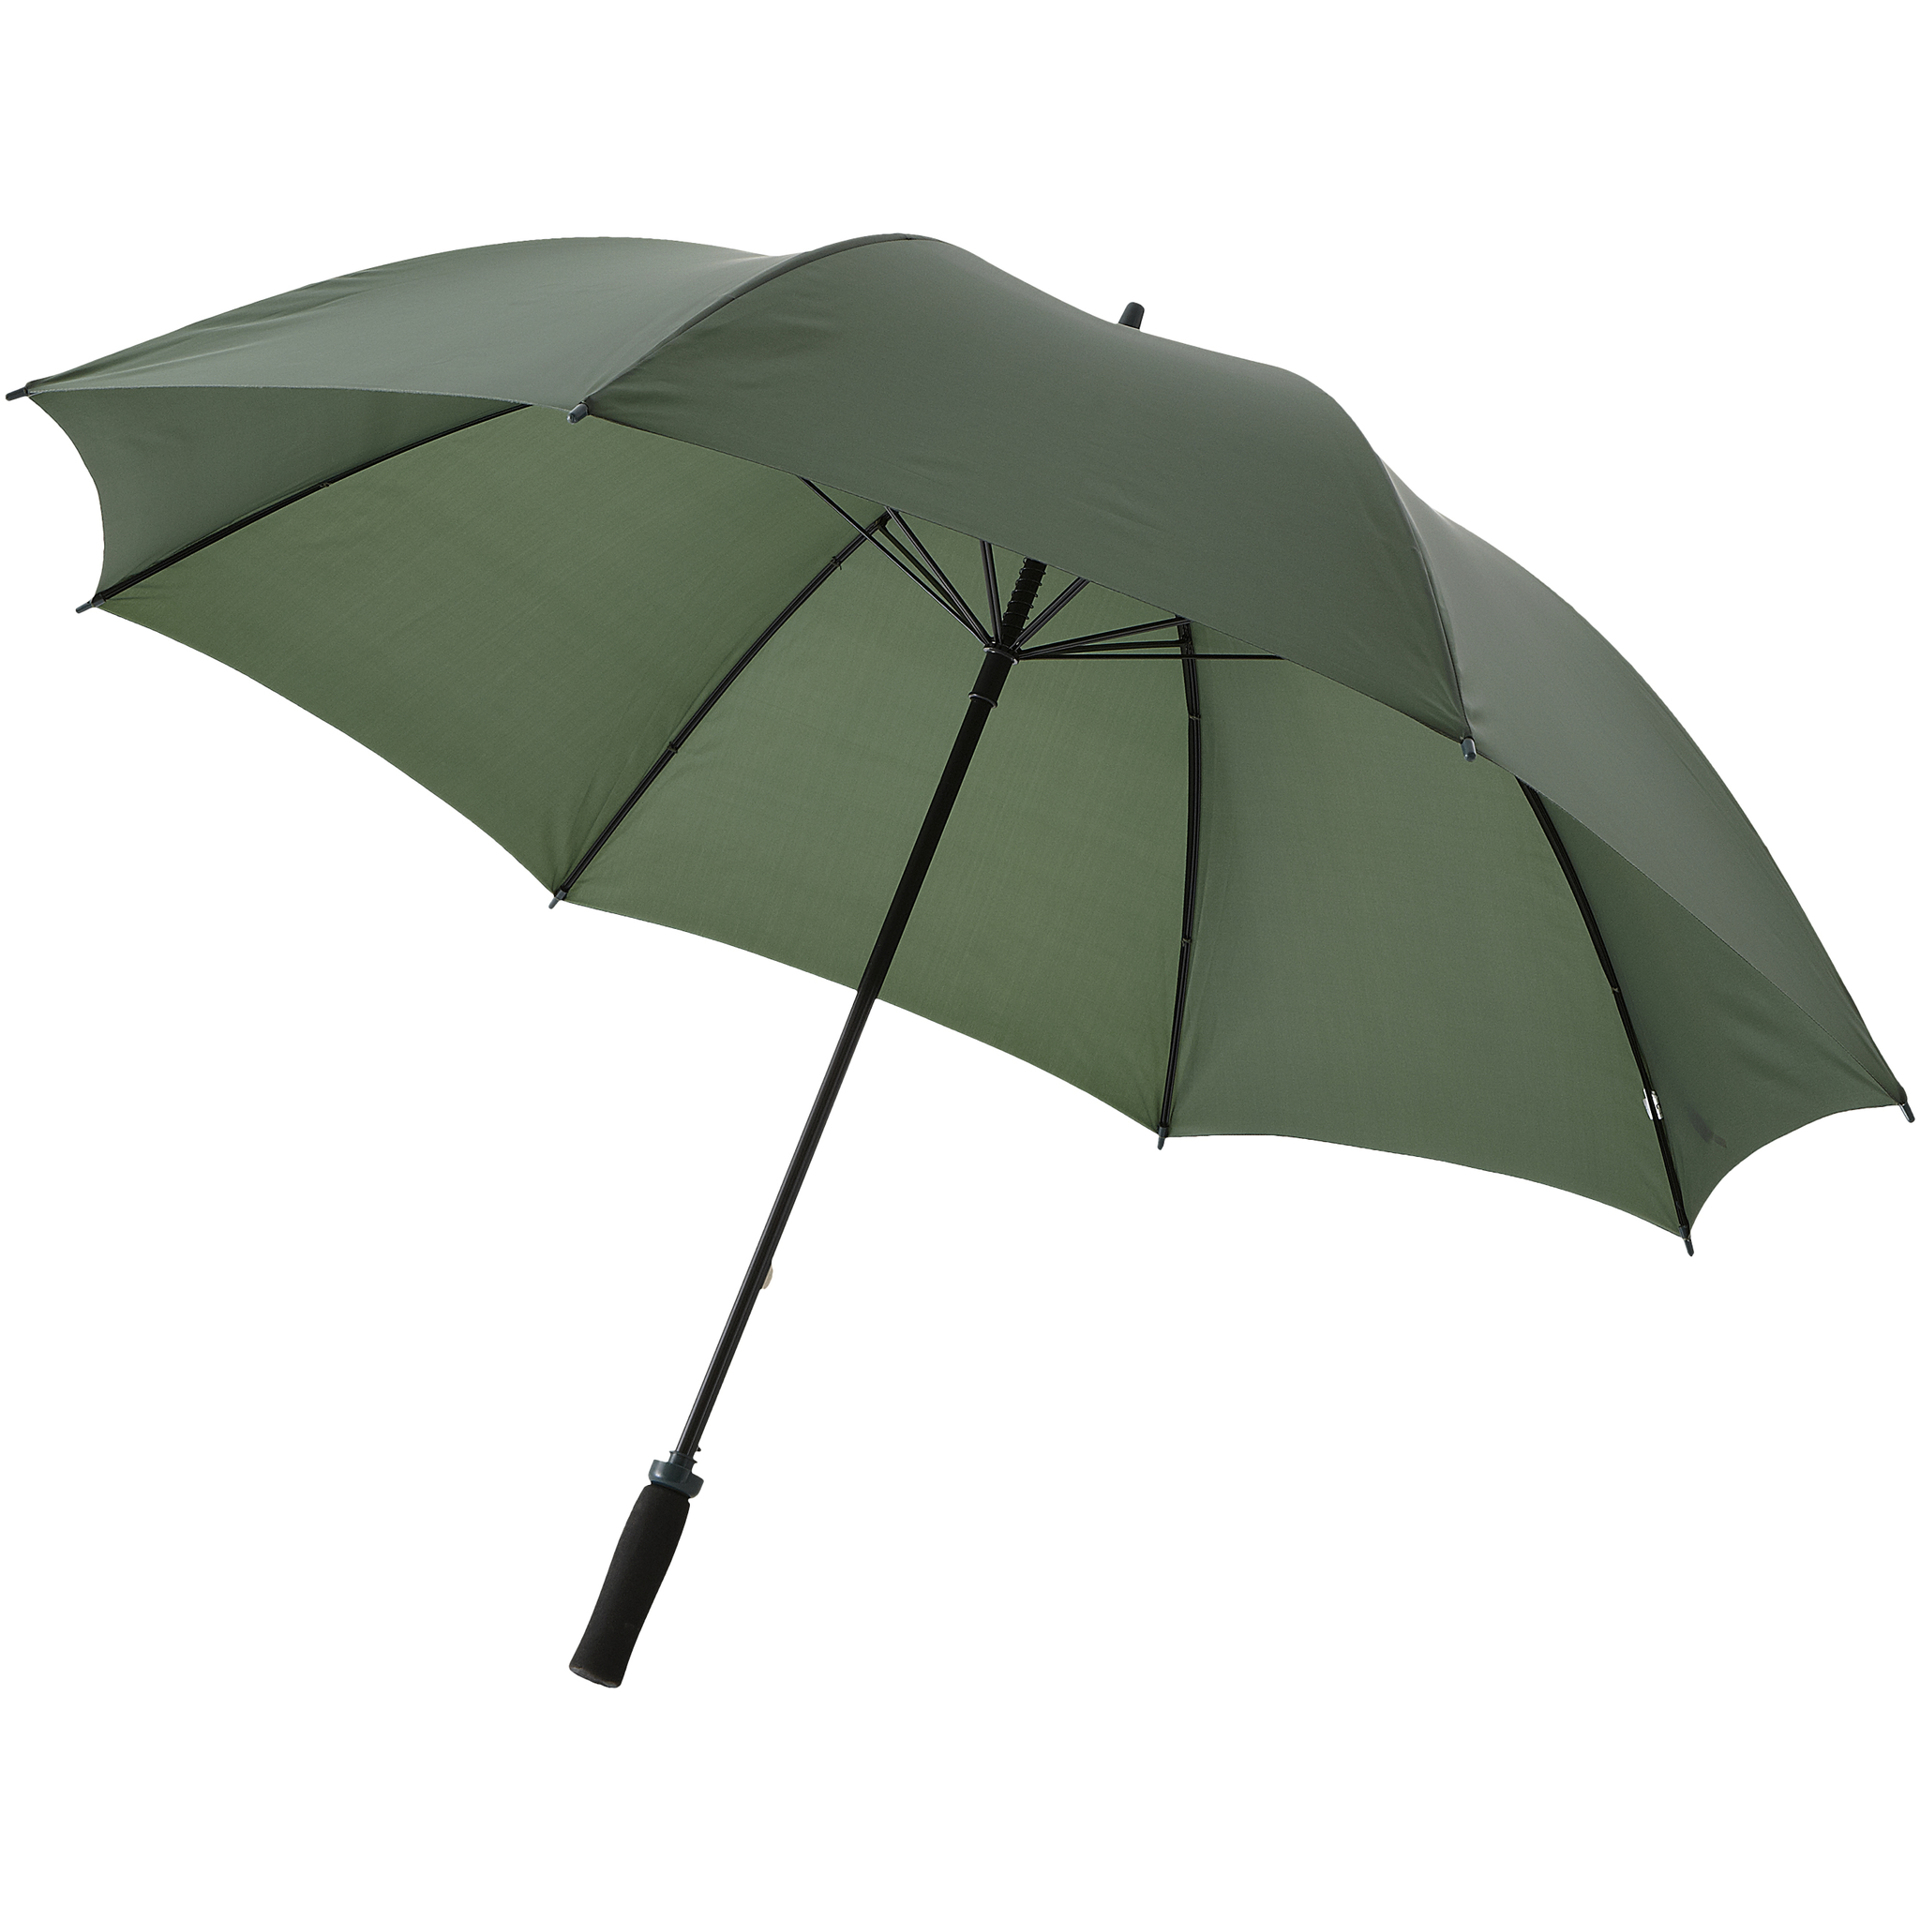 Storm Umbrella in khaki